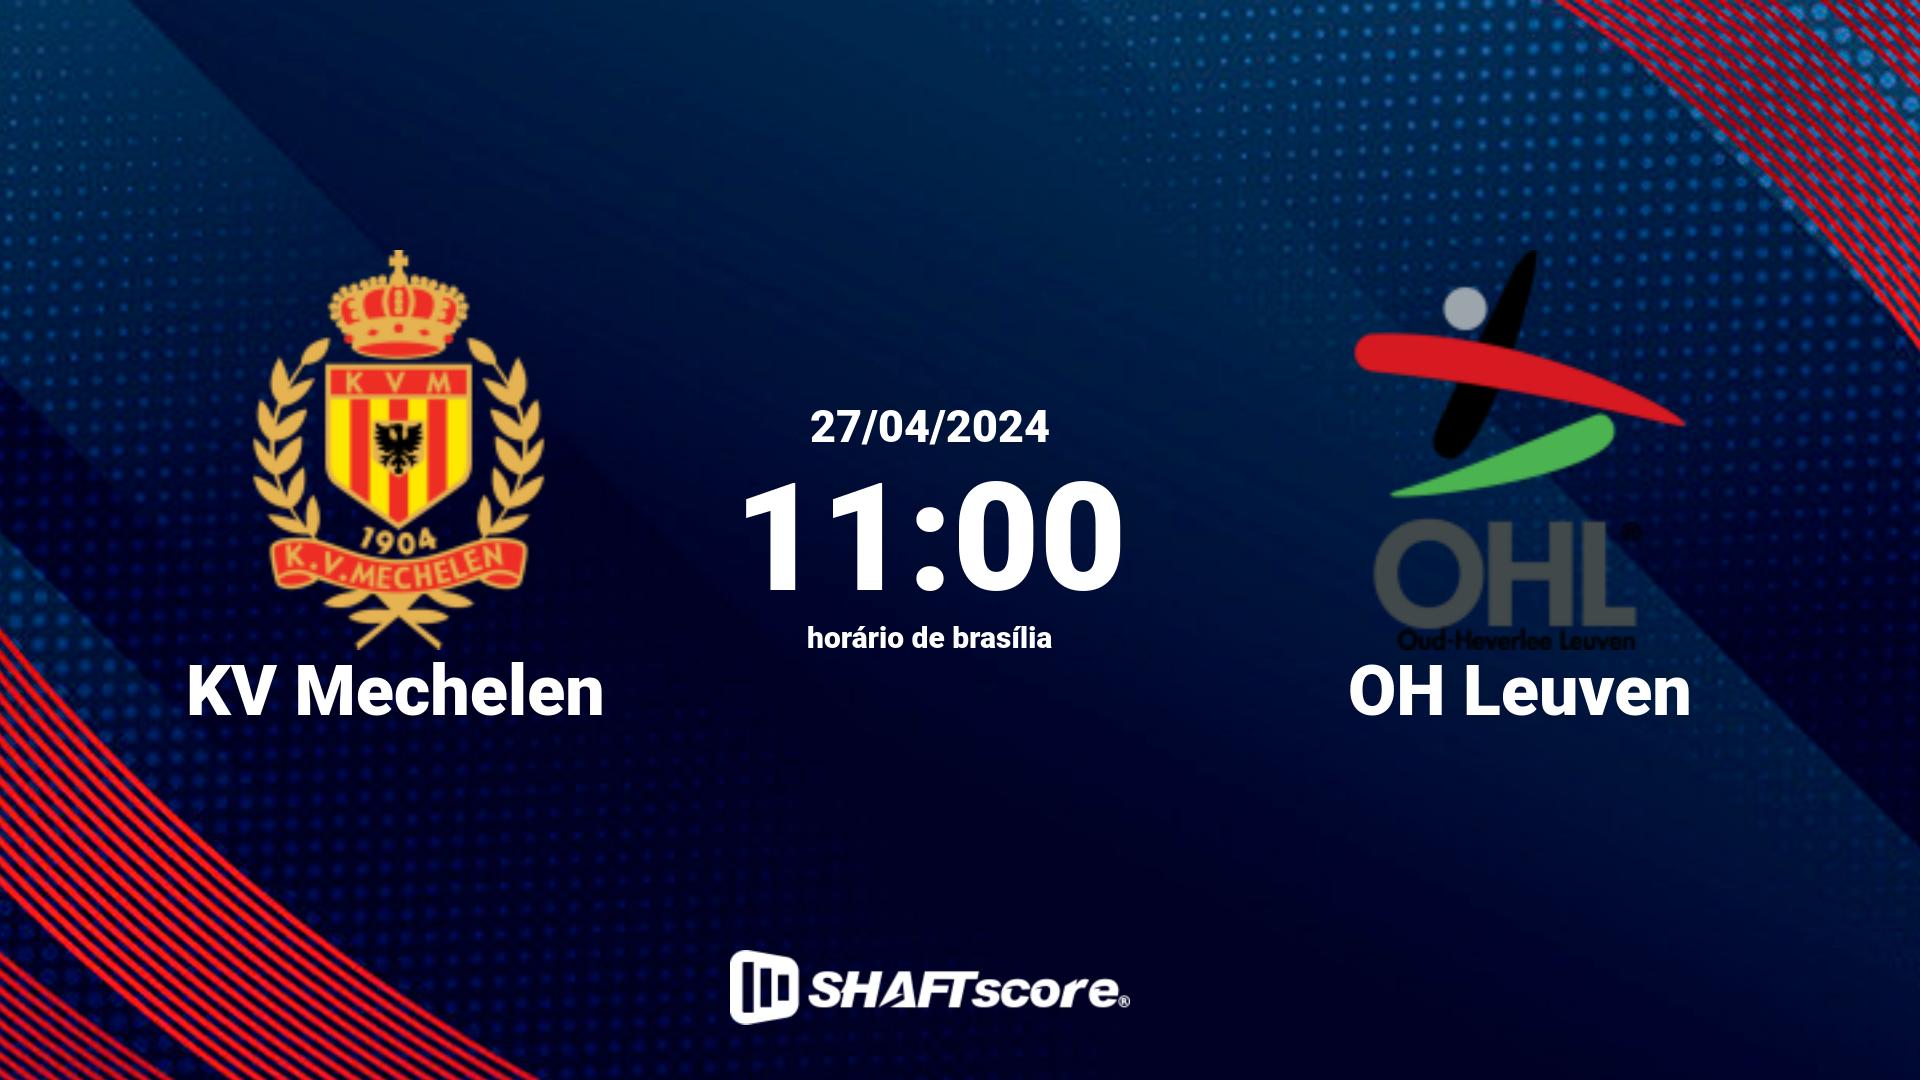 Estatísticas do jogo KV Mechelen vs OH Leuven 27.04 11:00